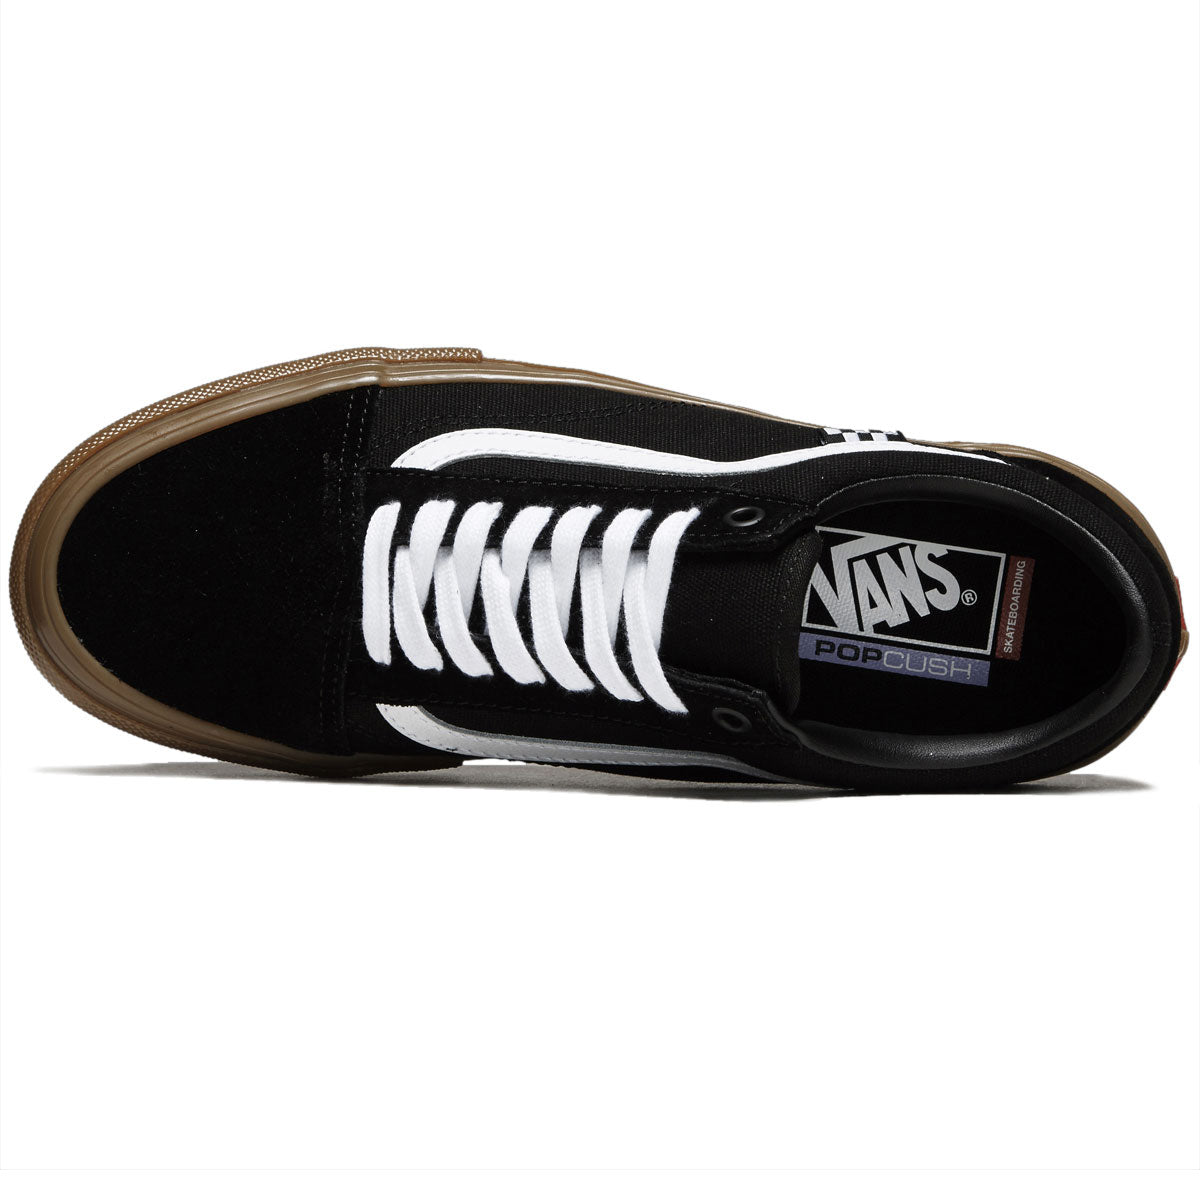 Vans Skate Old Skool Shoes - Black/Gum – CCS